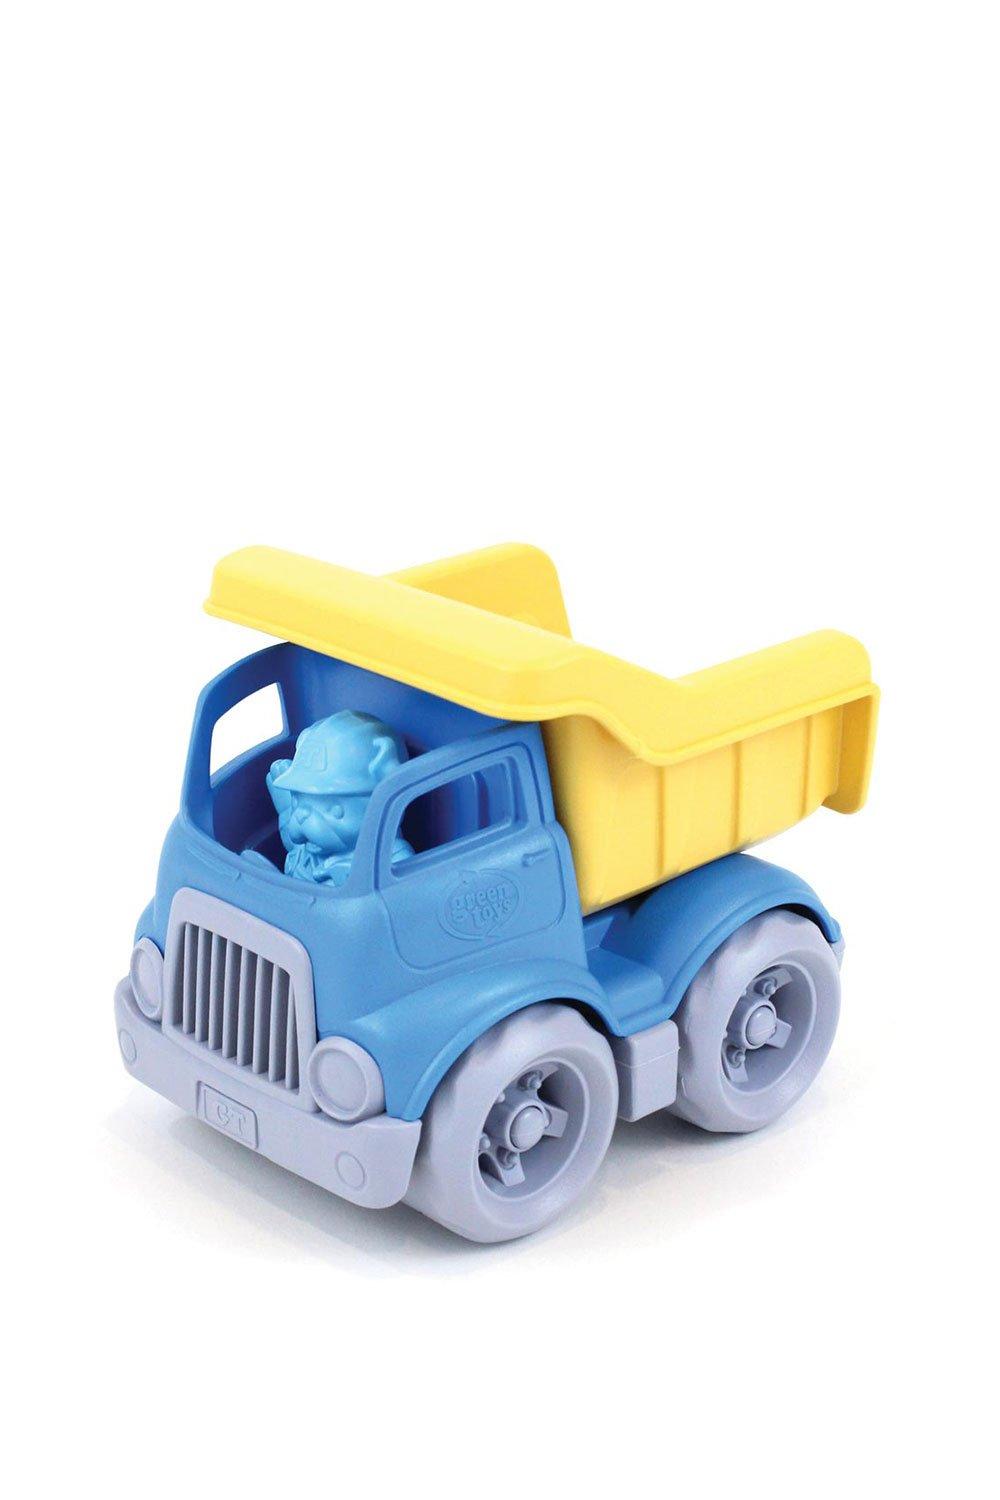 Green Toys Dumper Truck Toy|blue